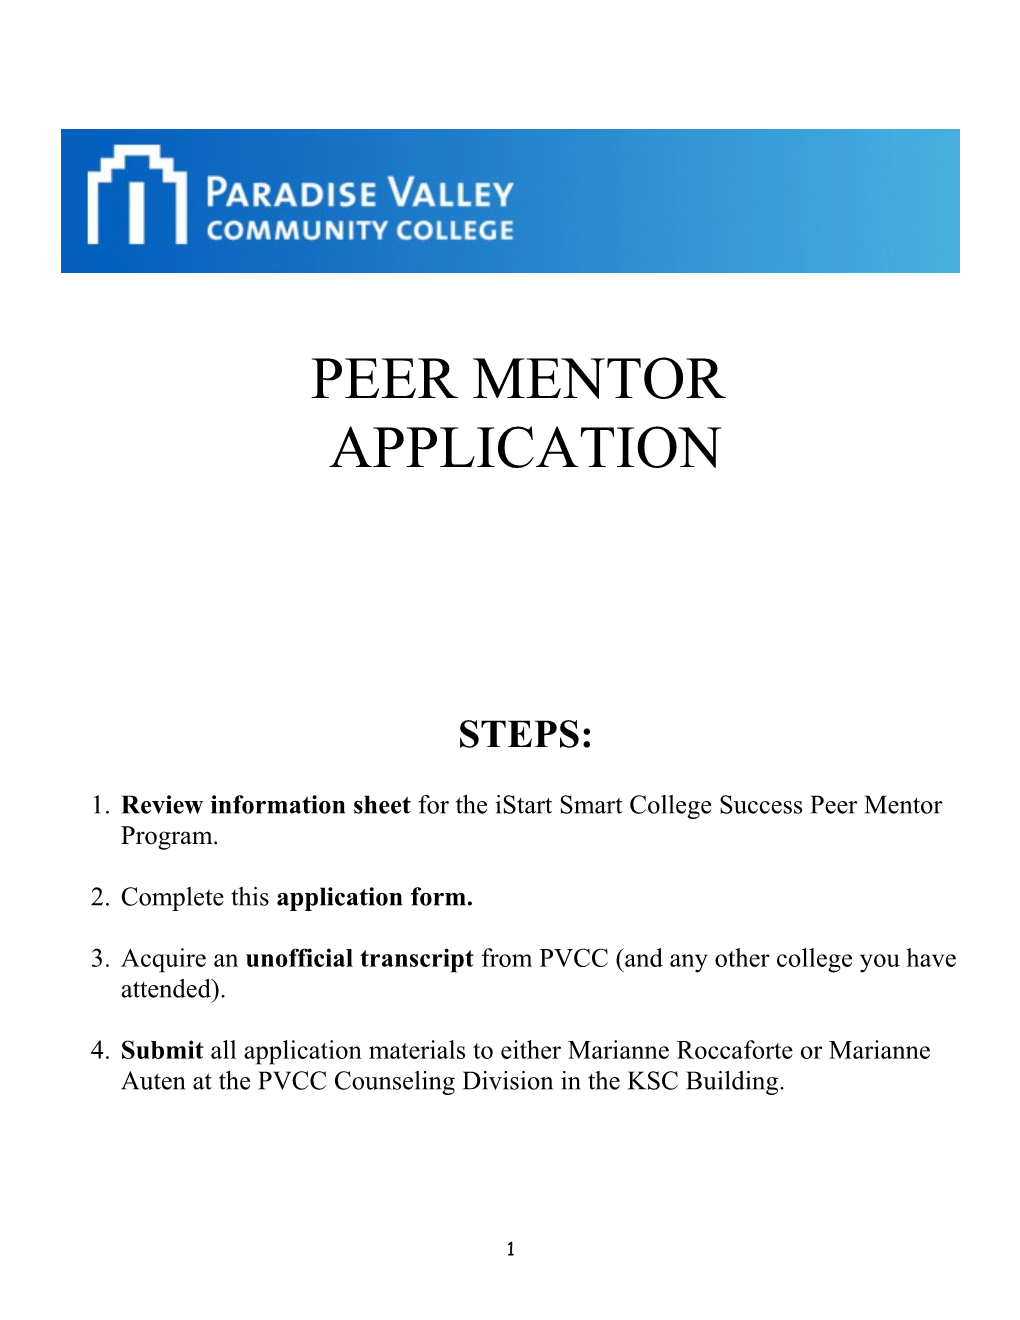 Peer Mentor Program